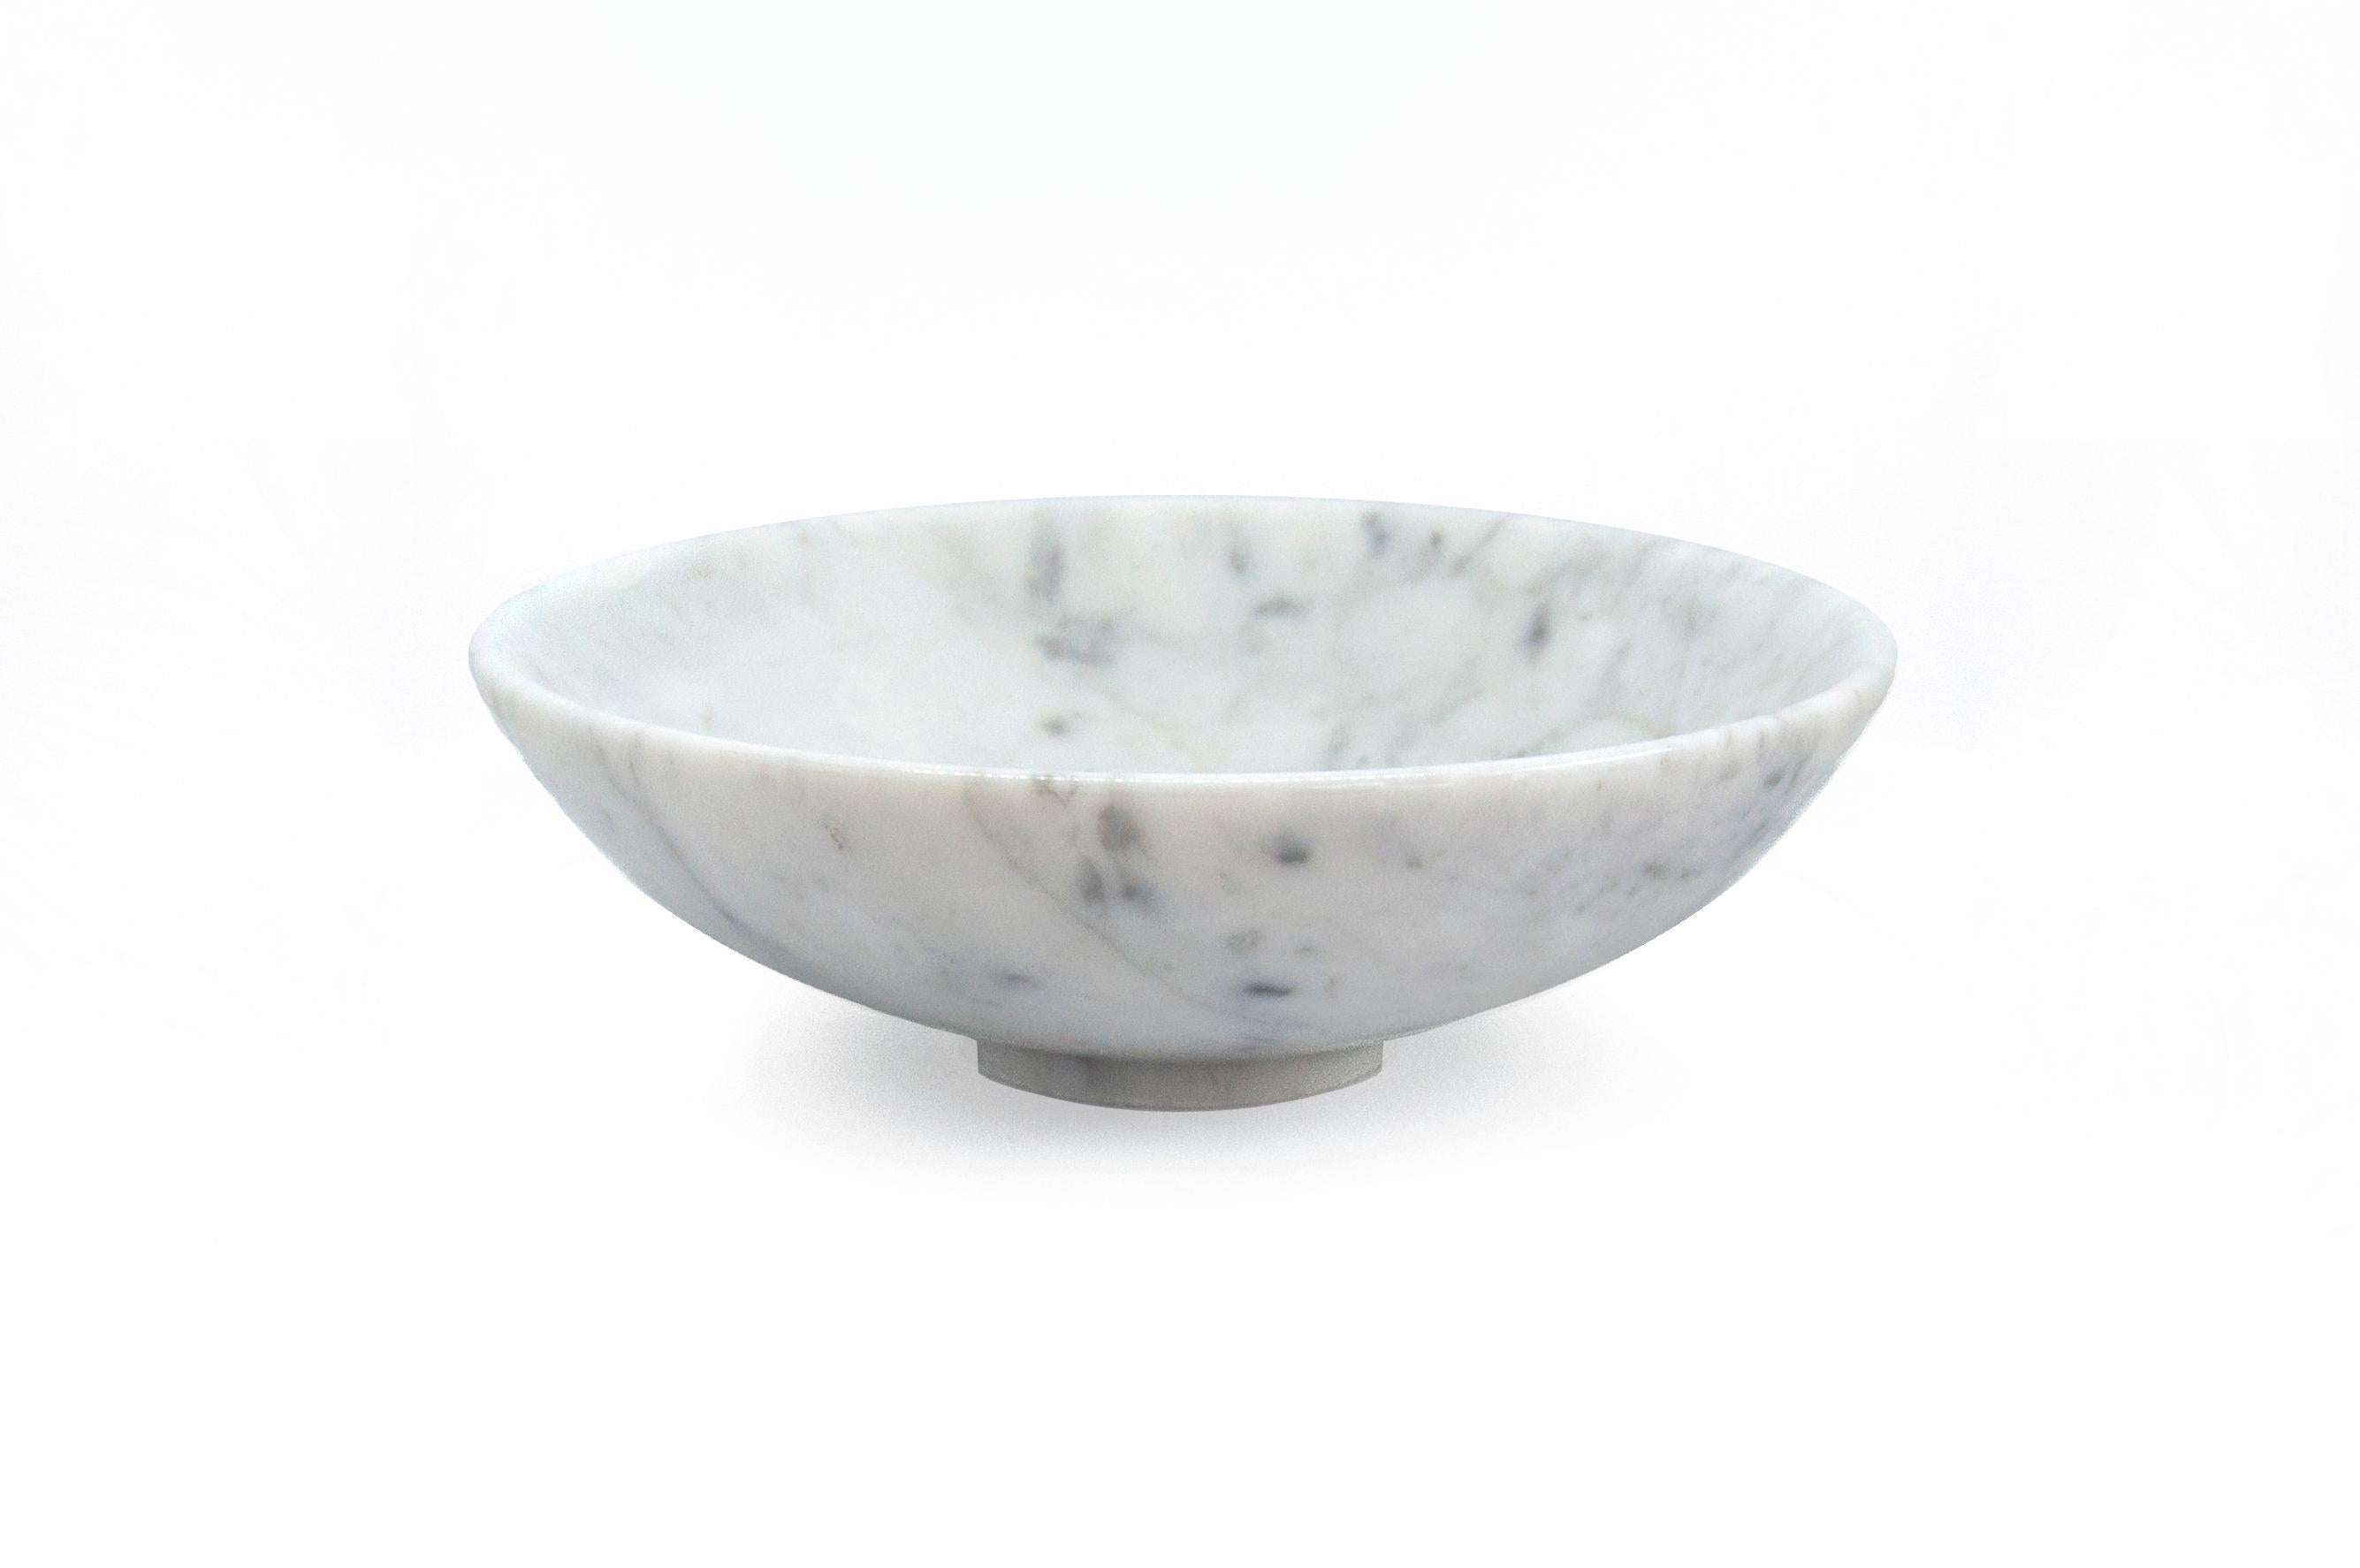 Bowl in White Carrara Marble 23.5 cm diameter (Italienisch)